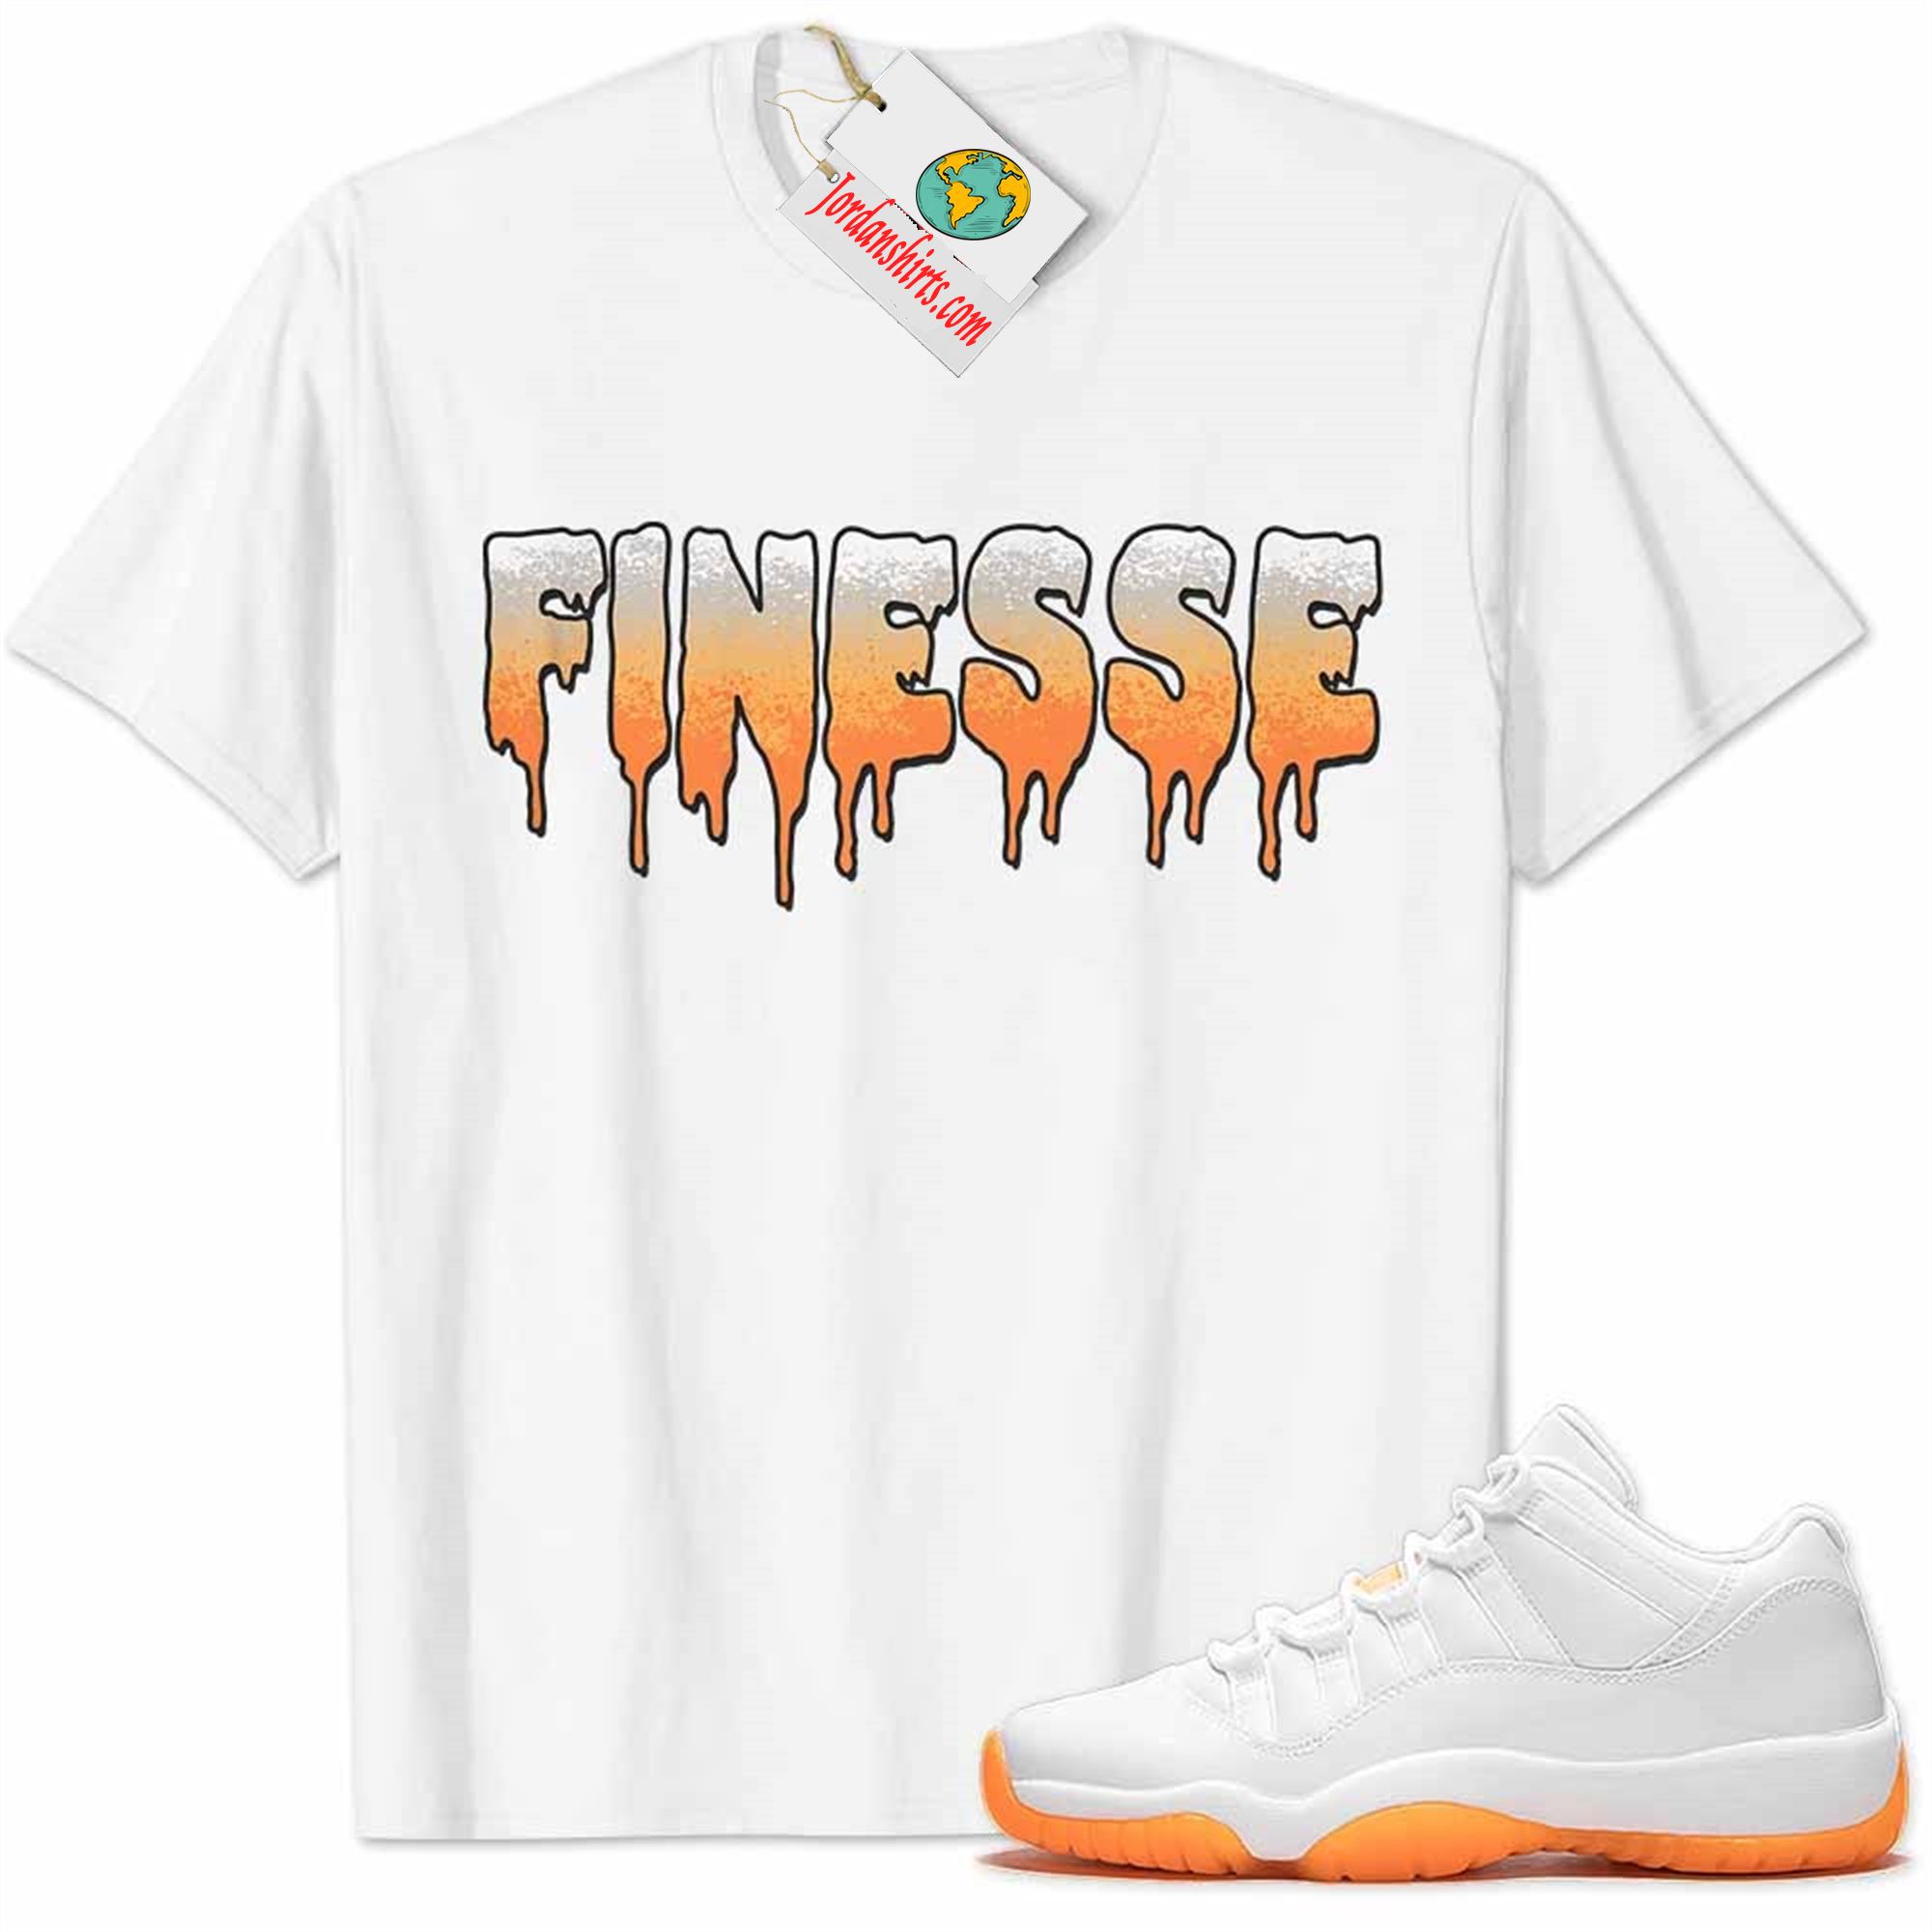 Jordan 11 Shirt, Jordan 11 Citrus Shirt Finesse Drip White Size Up To 5xl